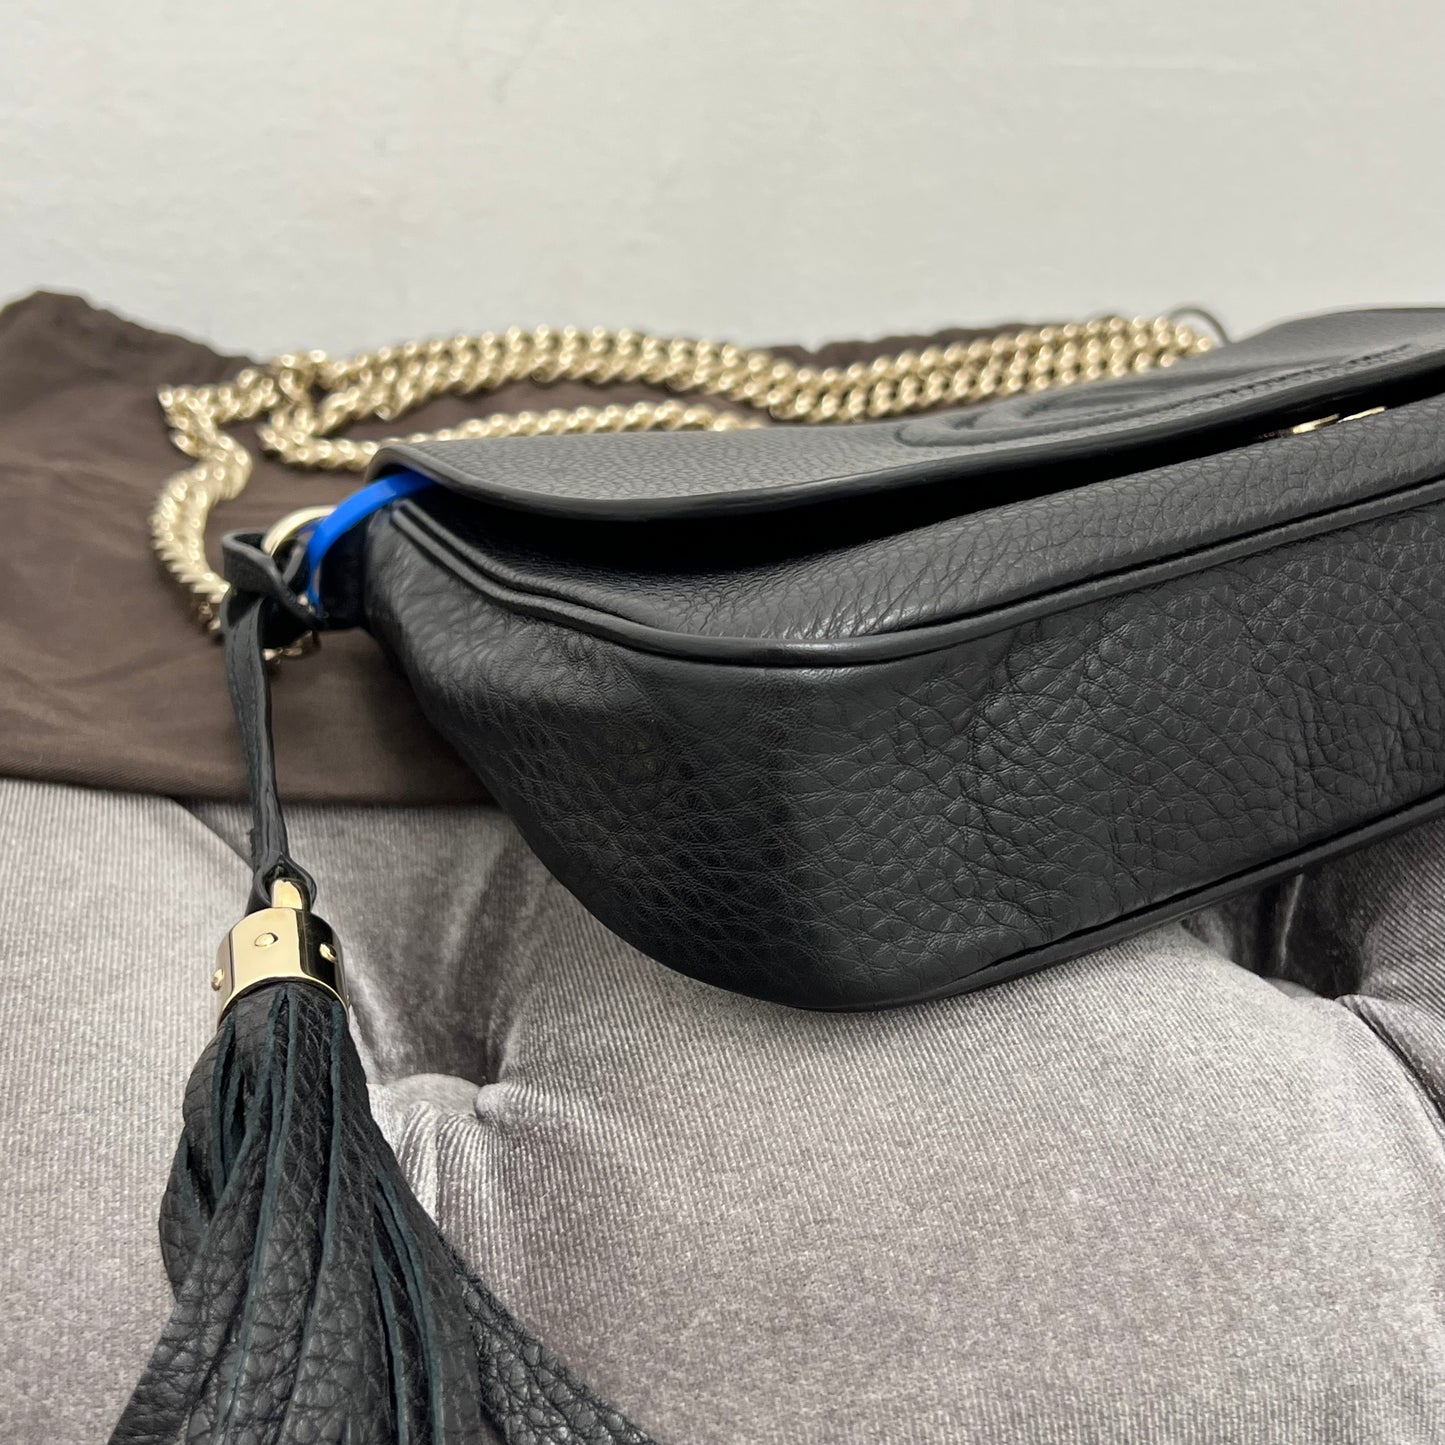 Gucci Soho Chain Crossbody Bag